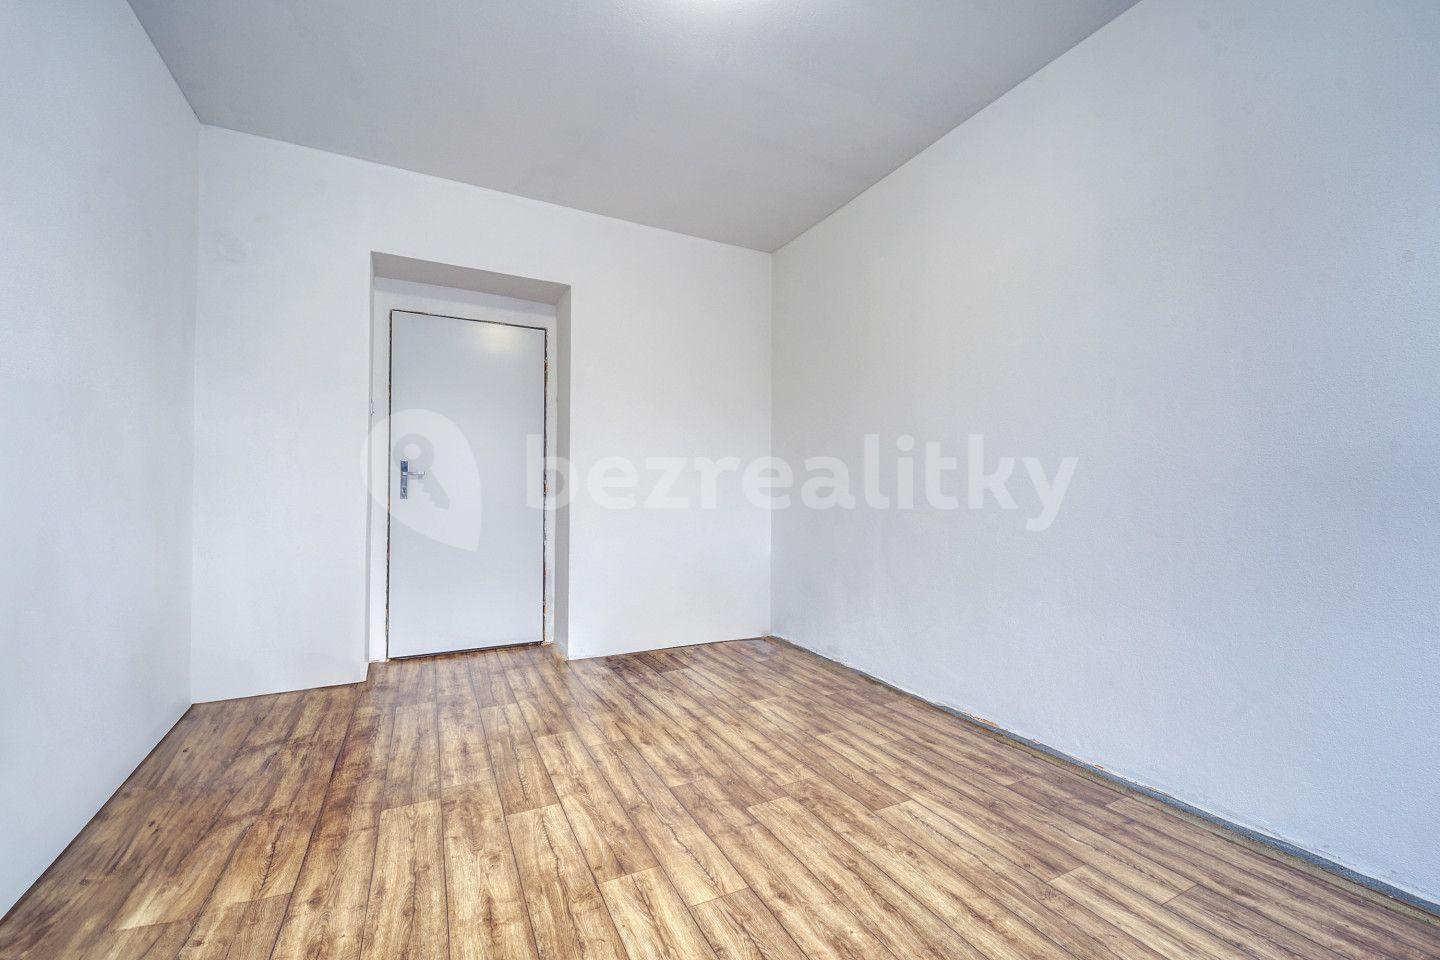 3 bedroom flat for sale, 51 m², Italská, Holýšov, Plzeňský Region